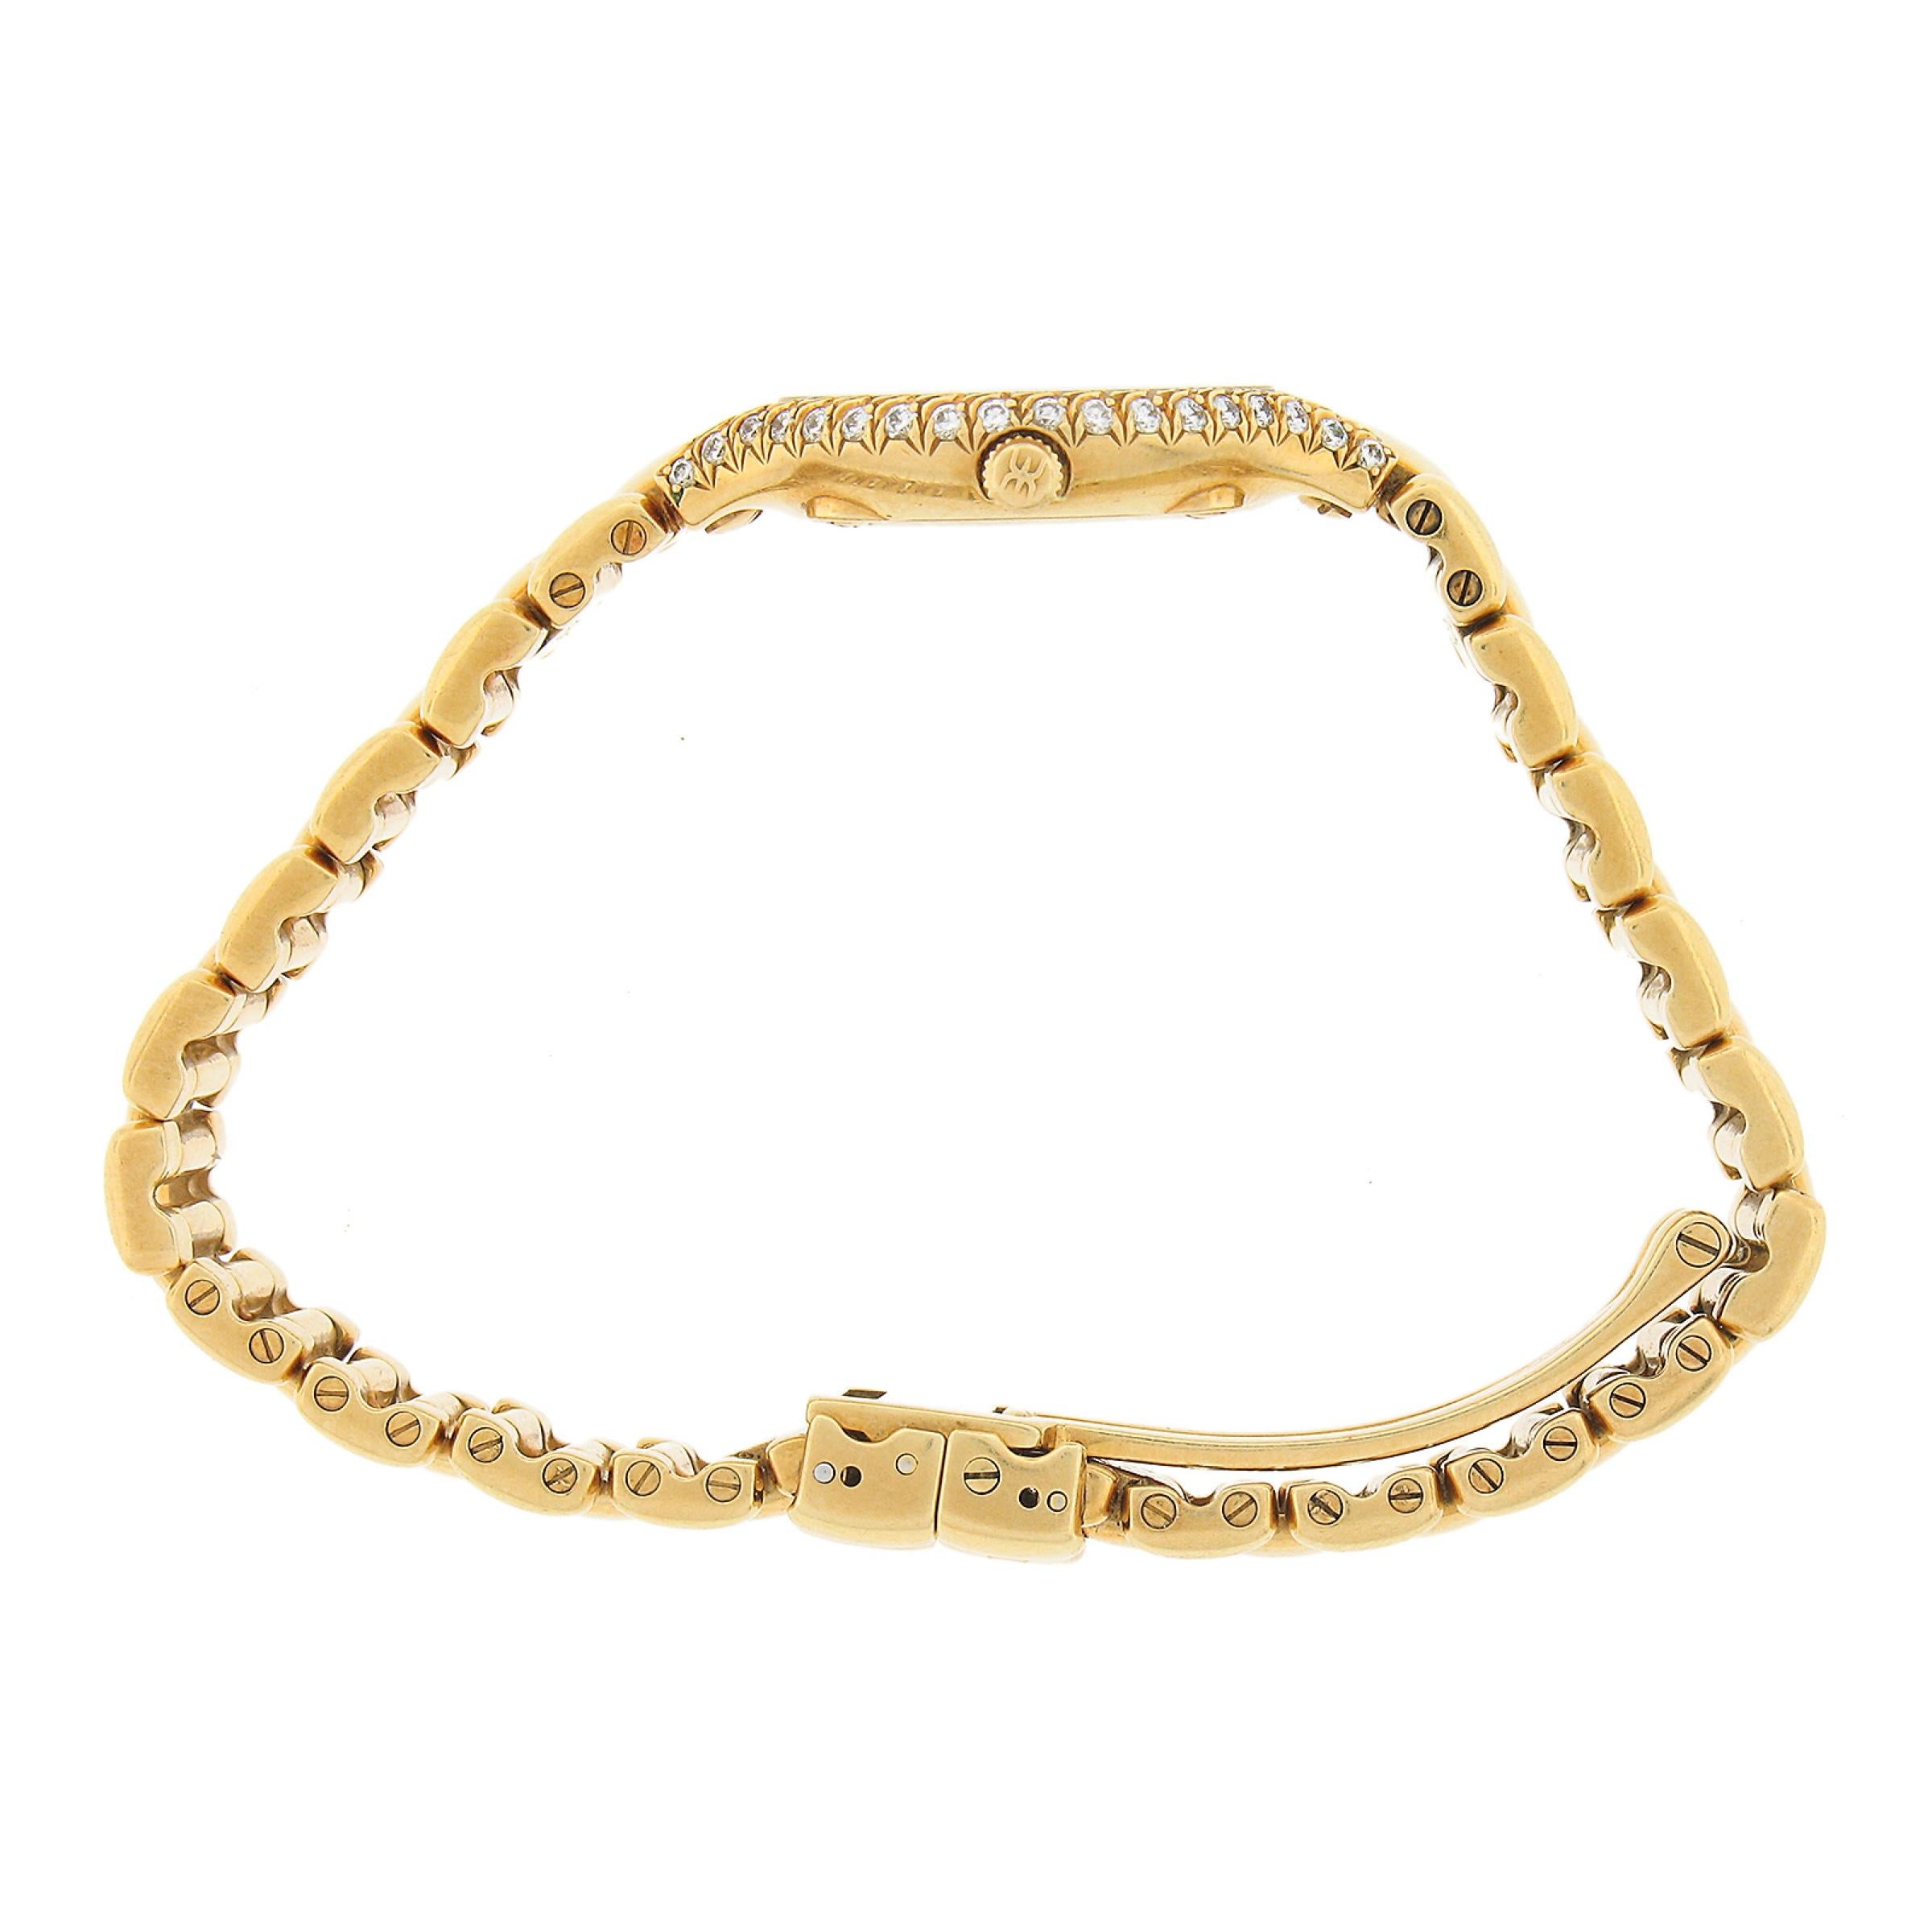 Round Cut Ebel Beluga 18k Gold 24mm Diamond Watch Bracelet w/ Mother of Pearl Dial 866969